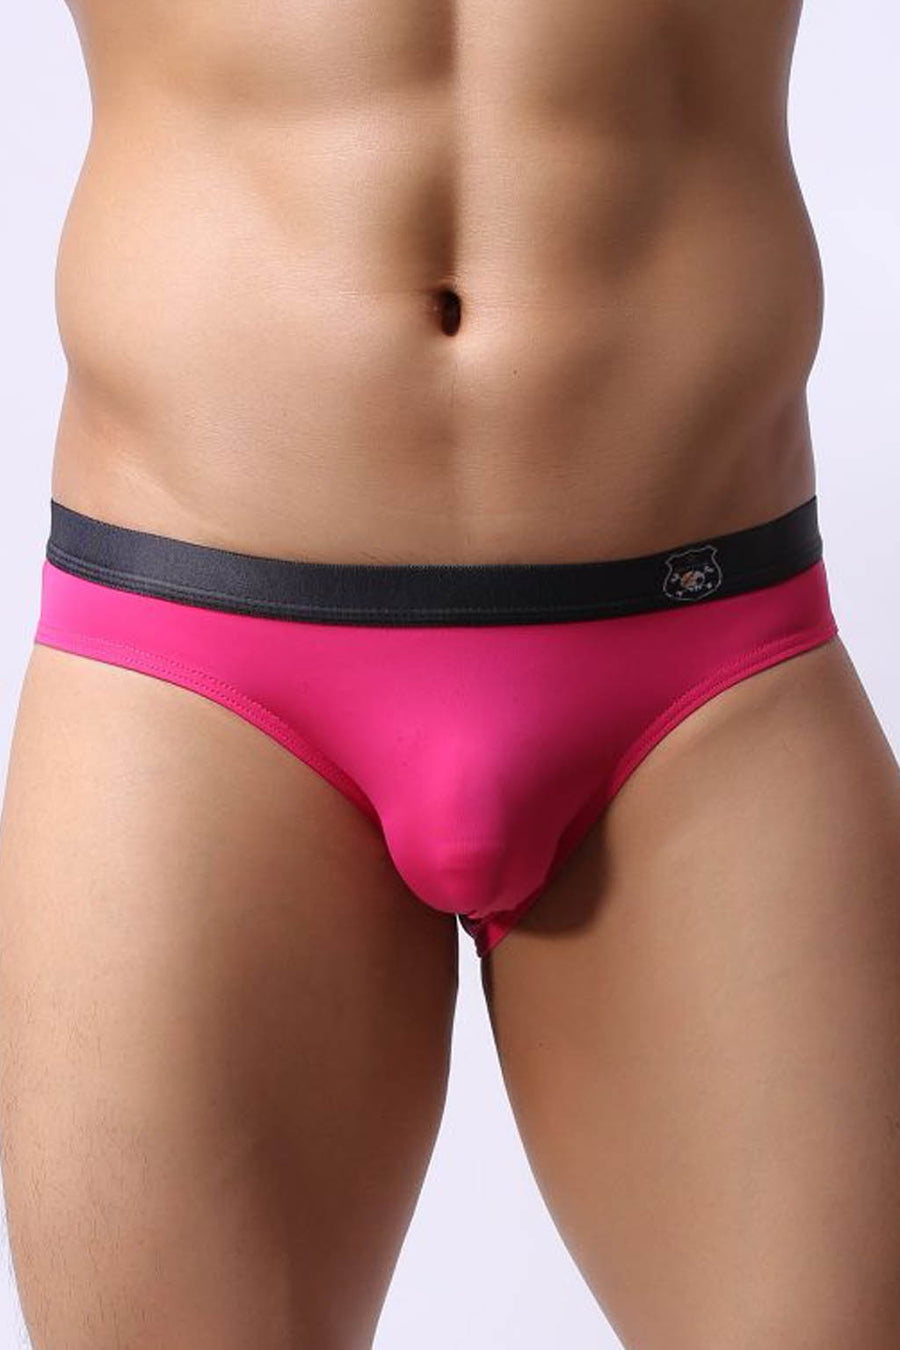 Brave Person Lowrise Thong Underwear – Bodywear for Men